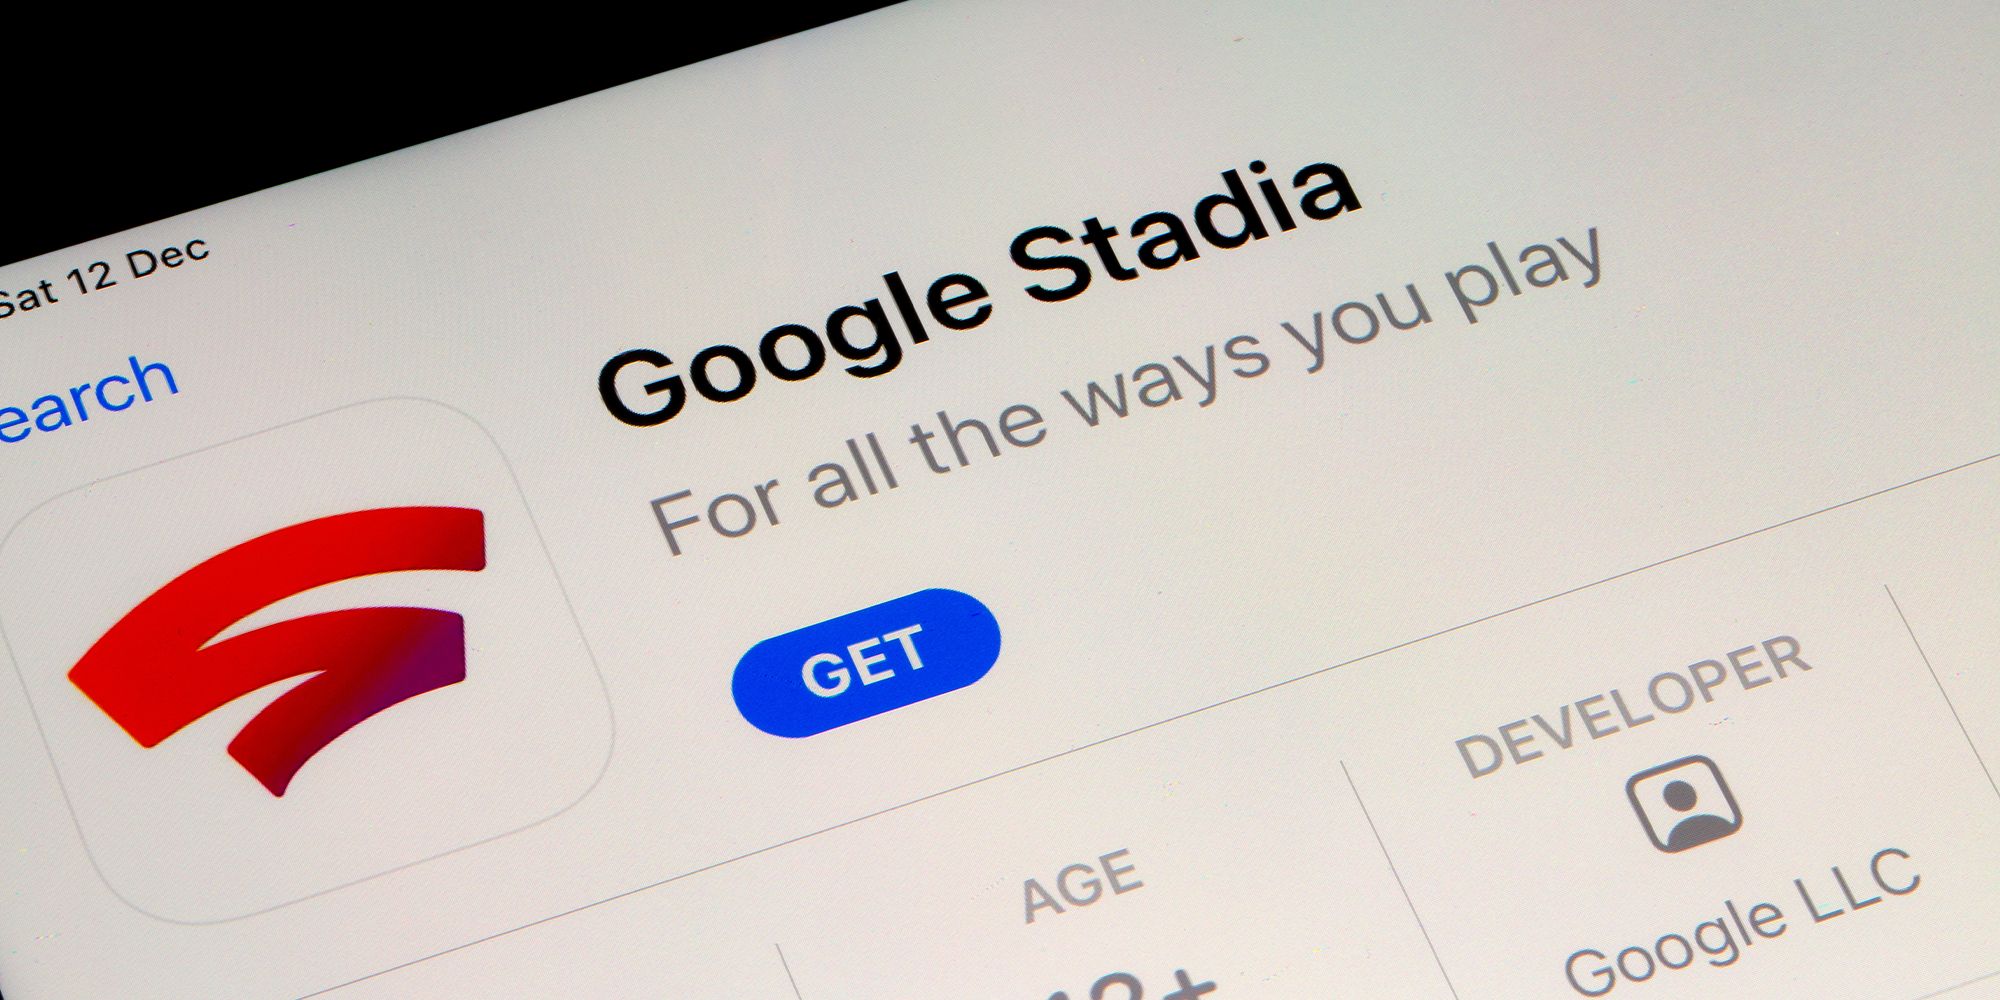 Google Stadia app